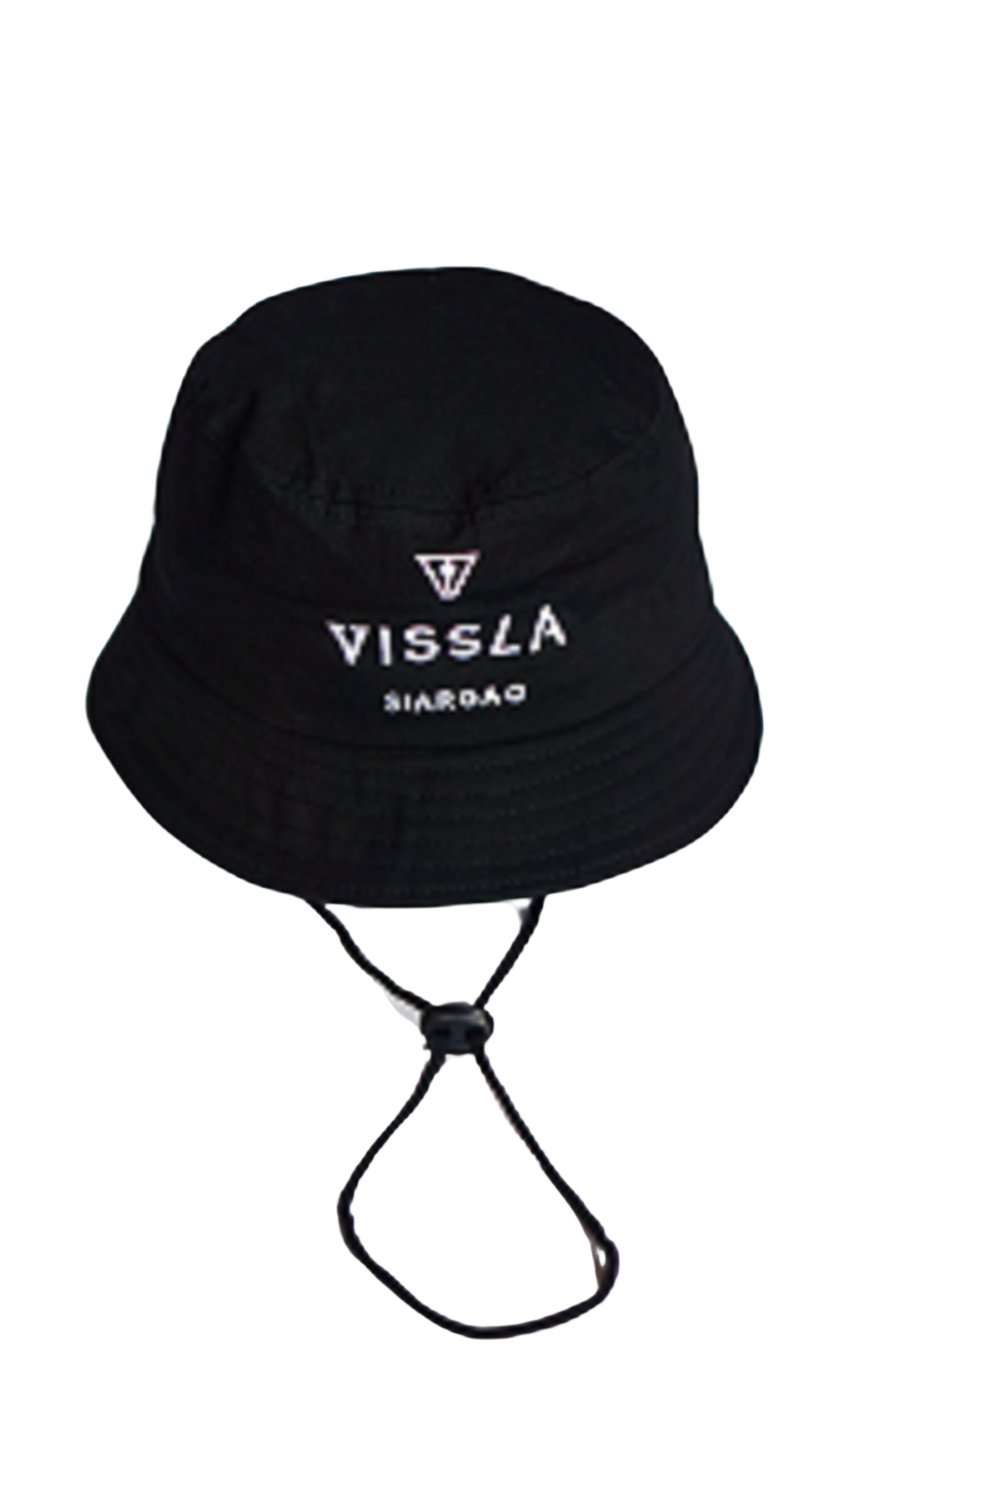 Vissla Siargao Bucket Hat (Black) - KS Boardriders Surf Shop